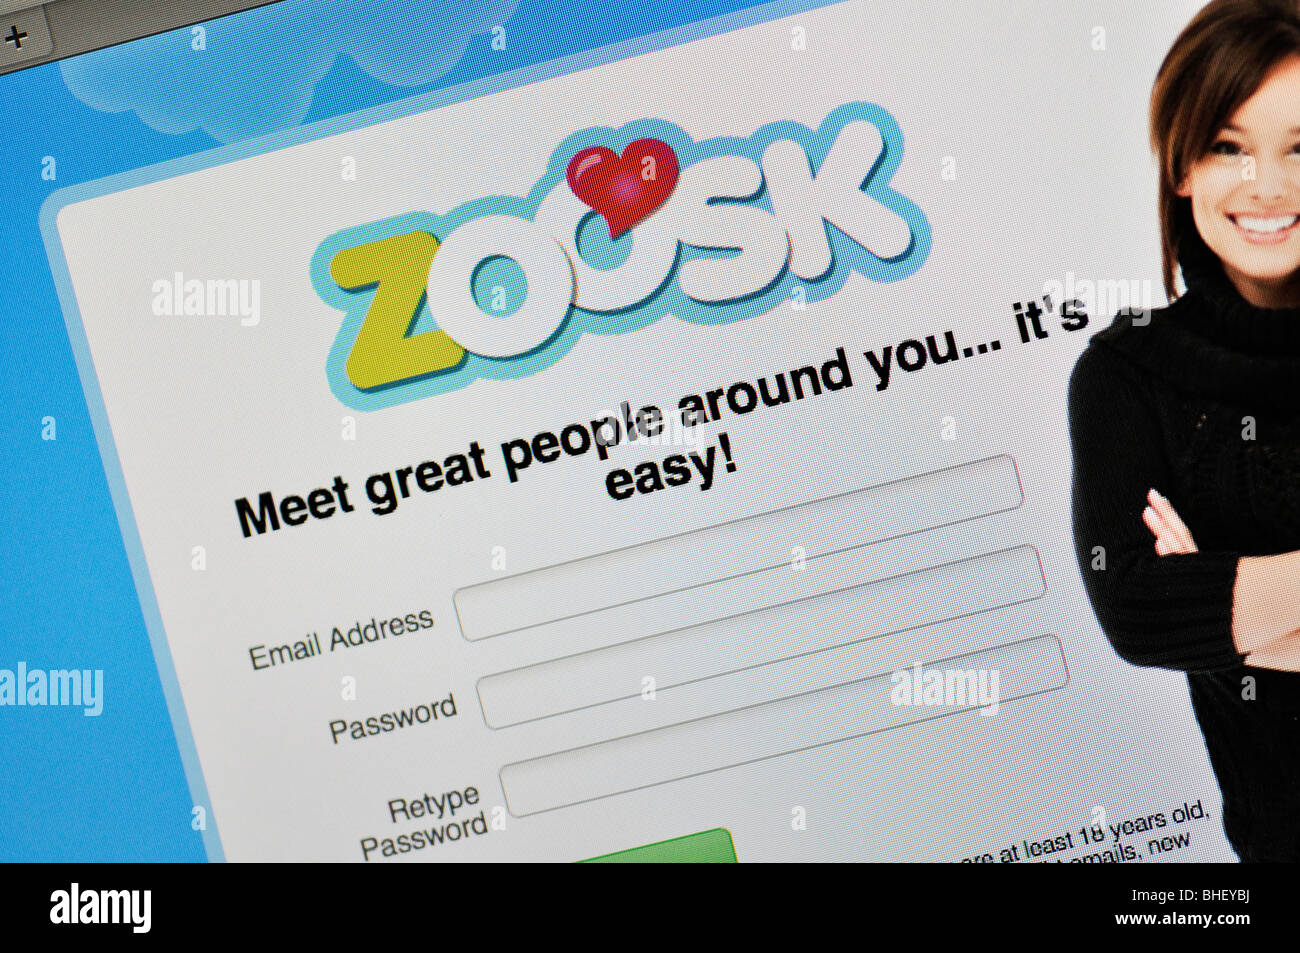 Dating uk zoosk login Zoosk Review